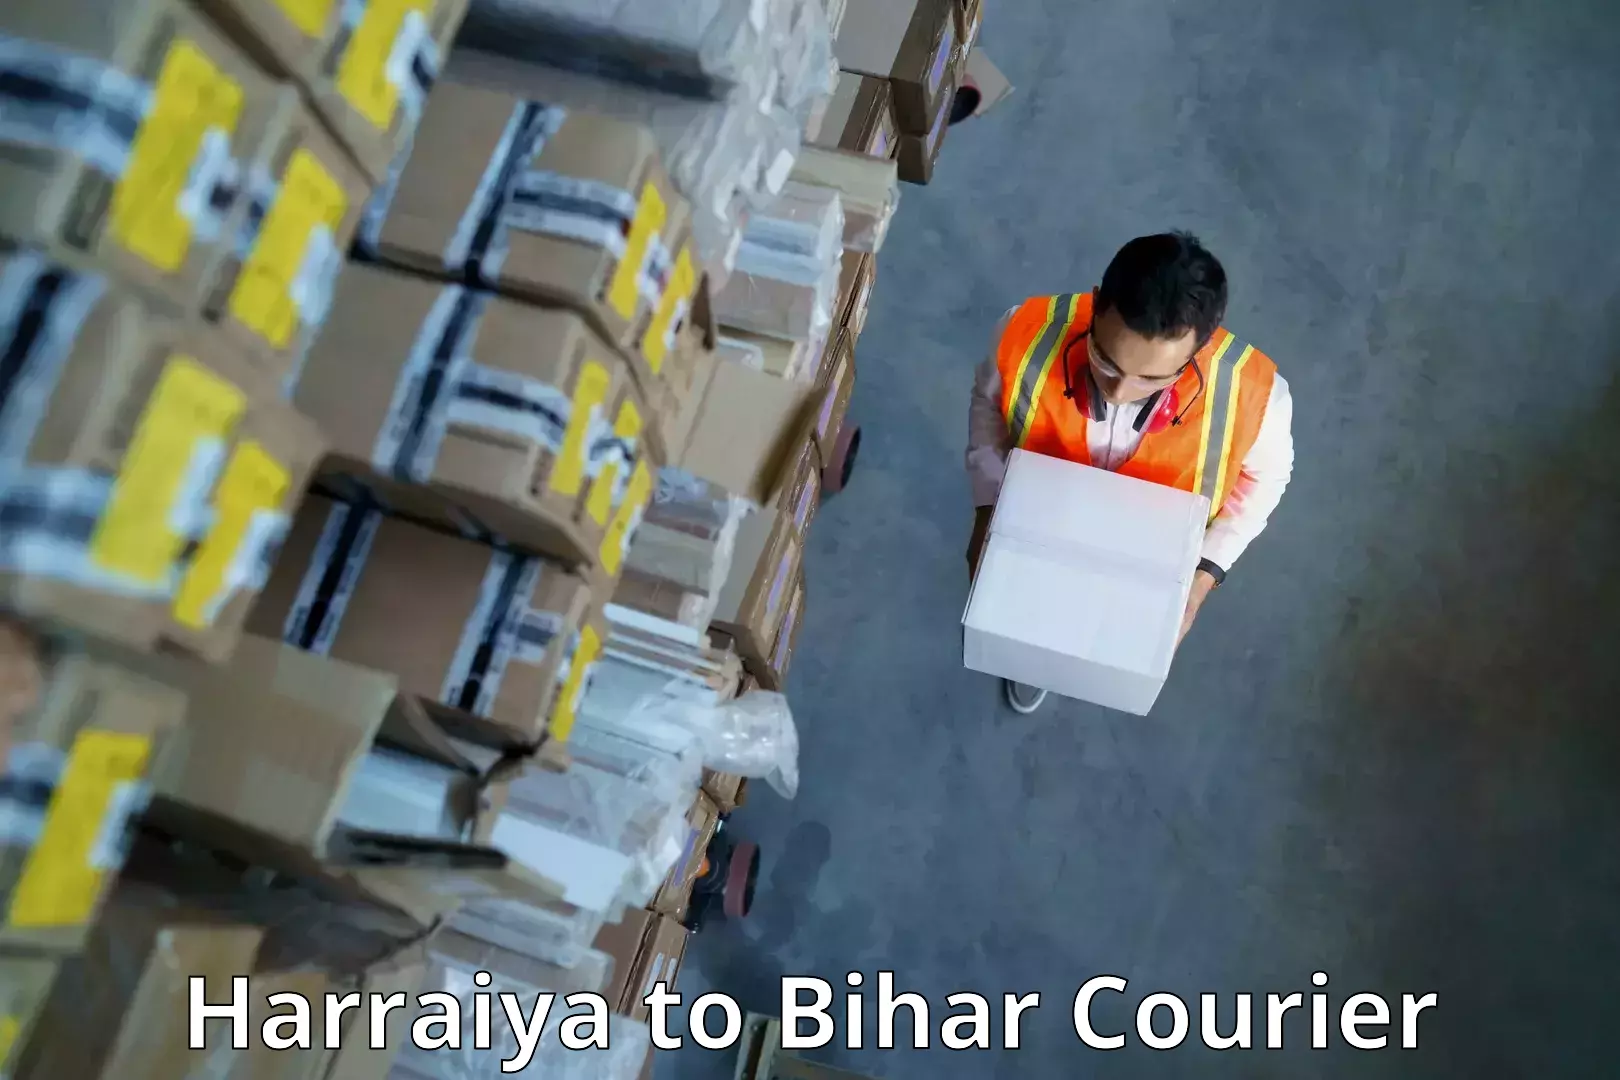 Courier service innovation Harraiya to Patna